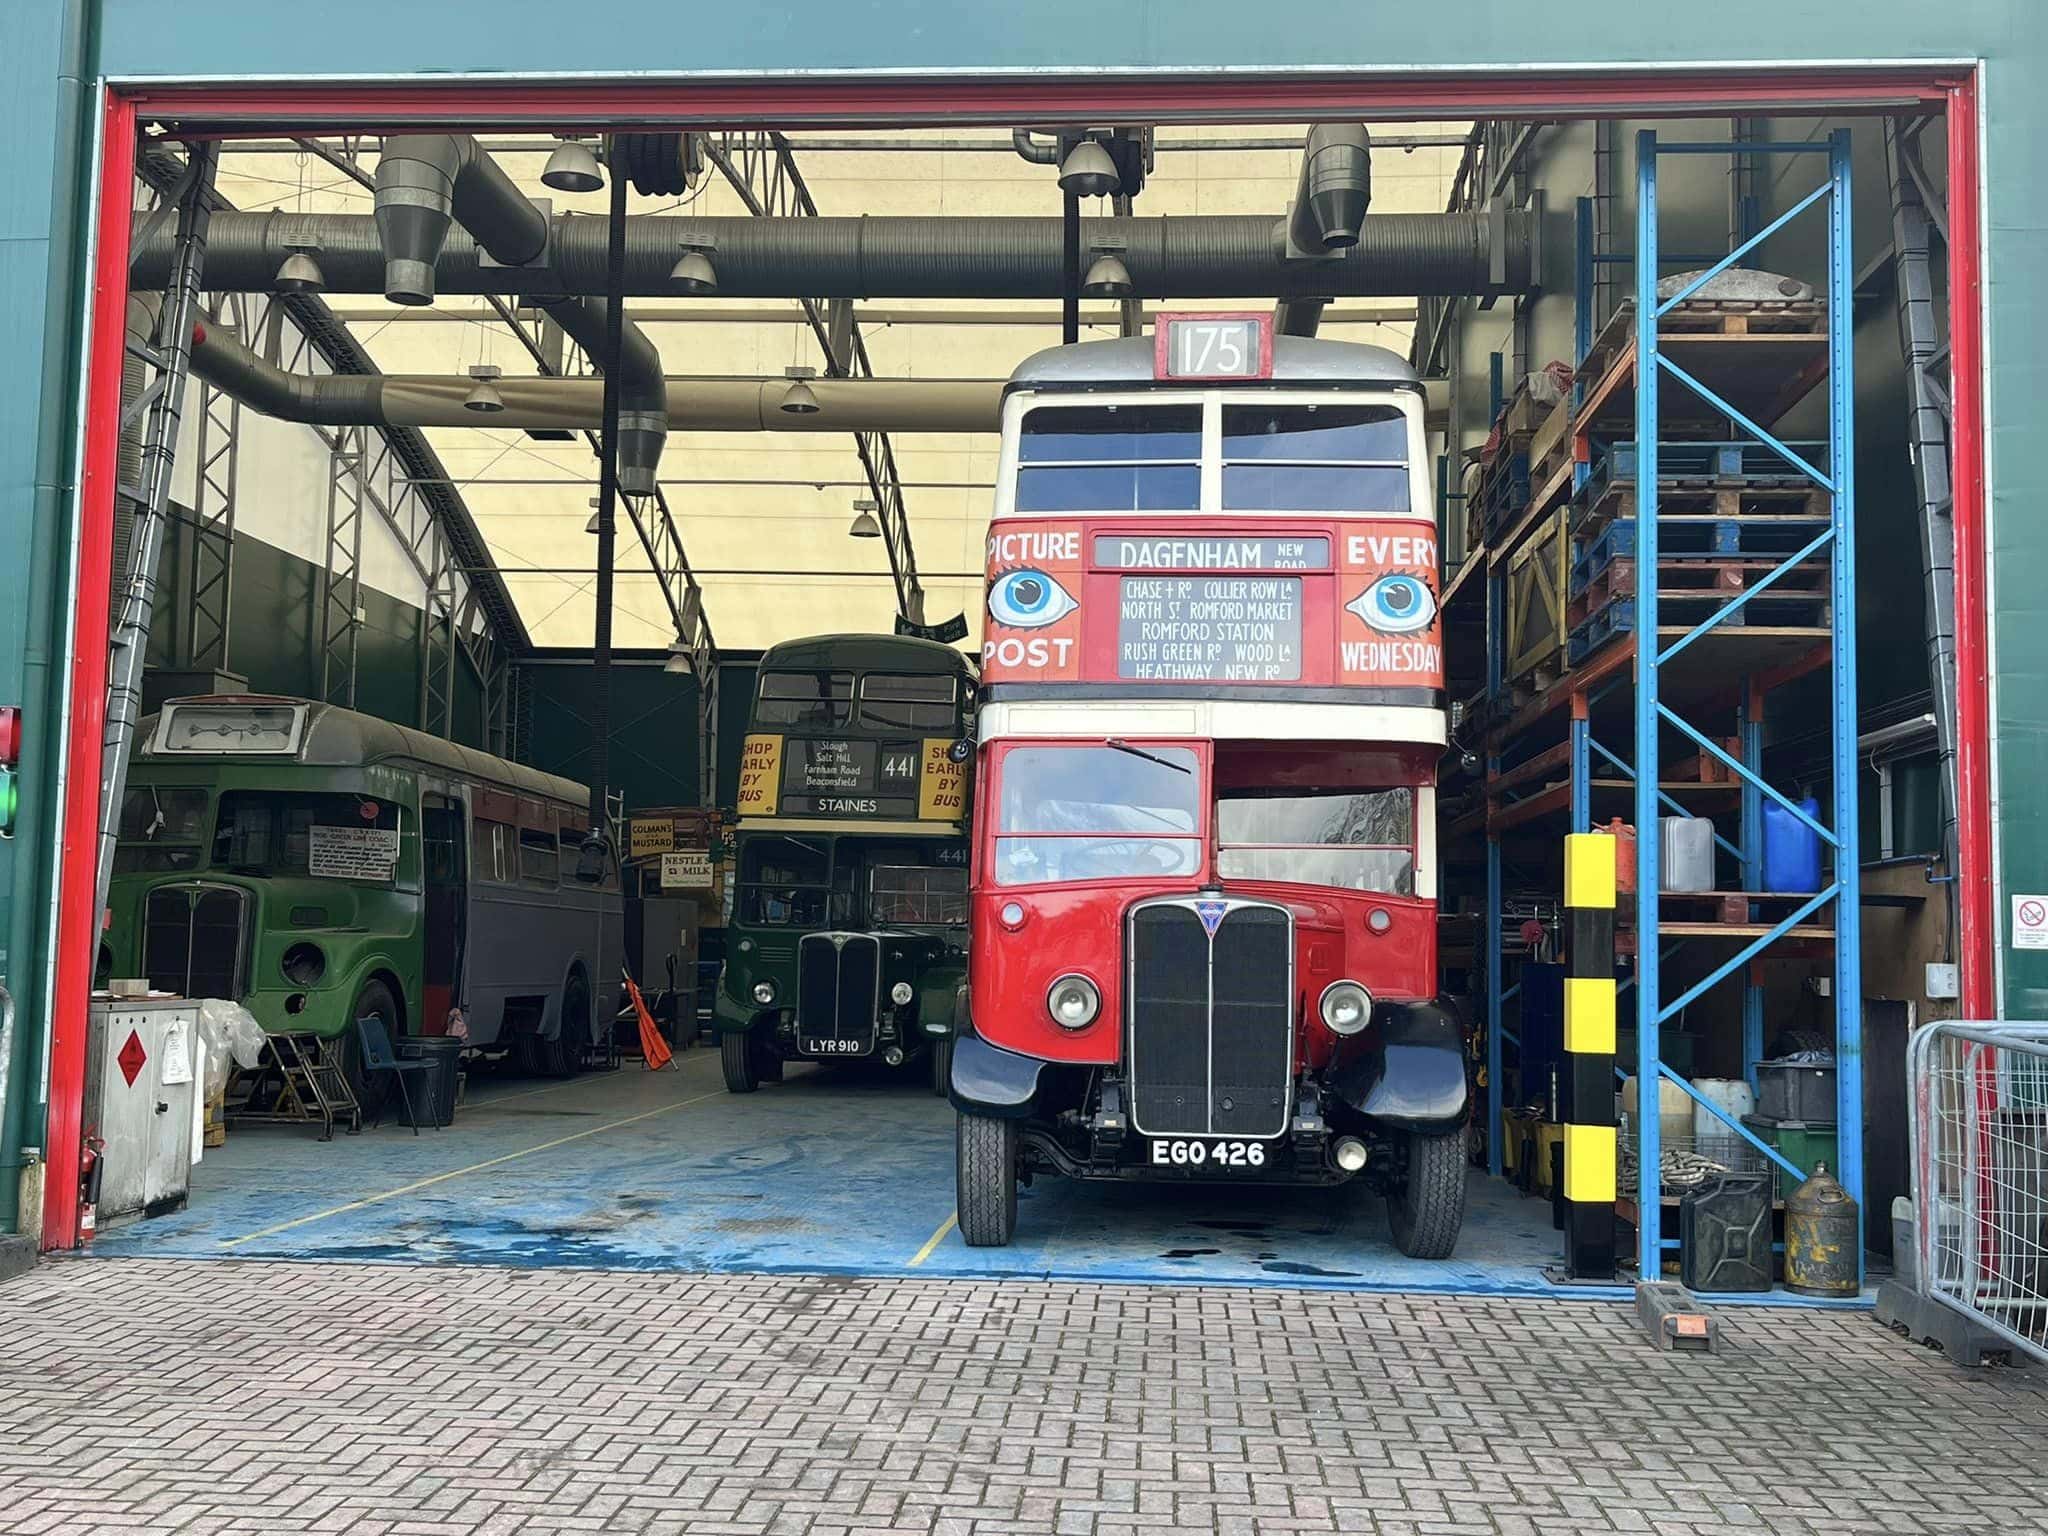 London Bus museum 